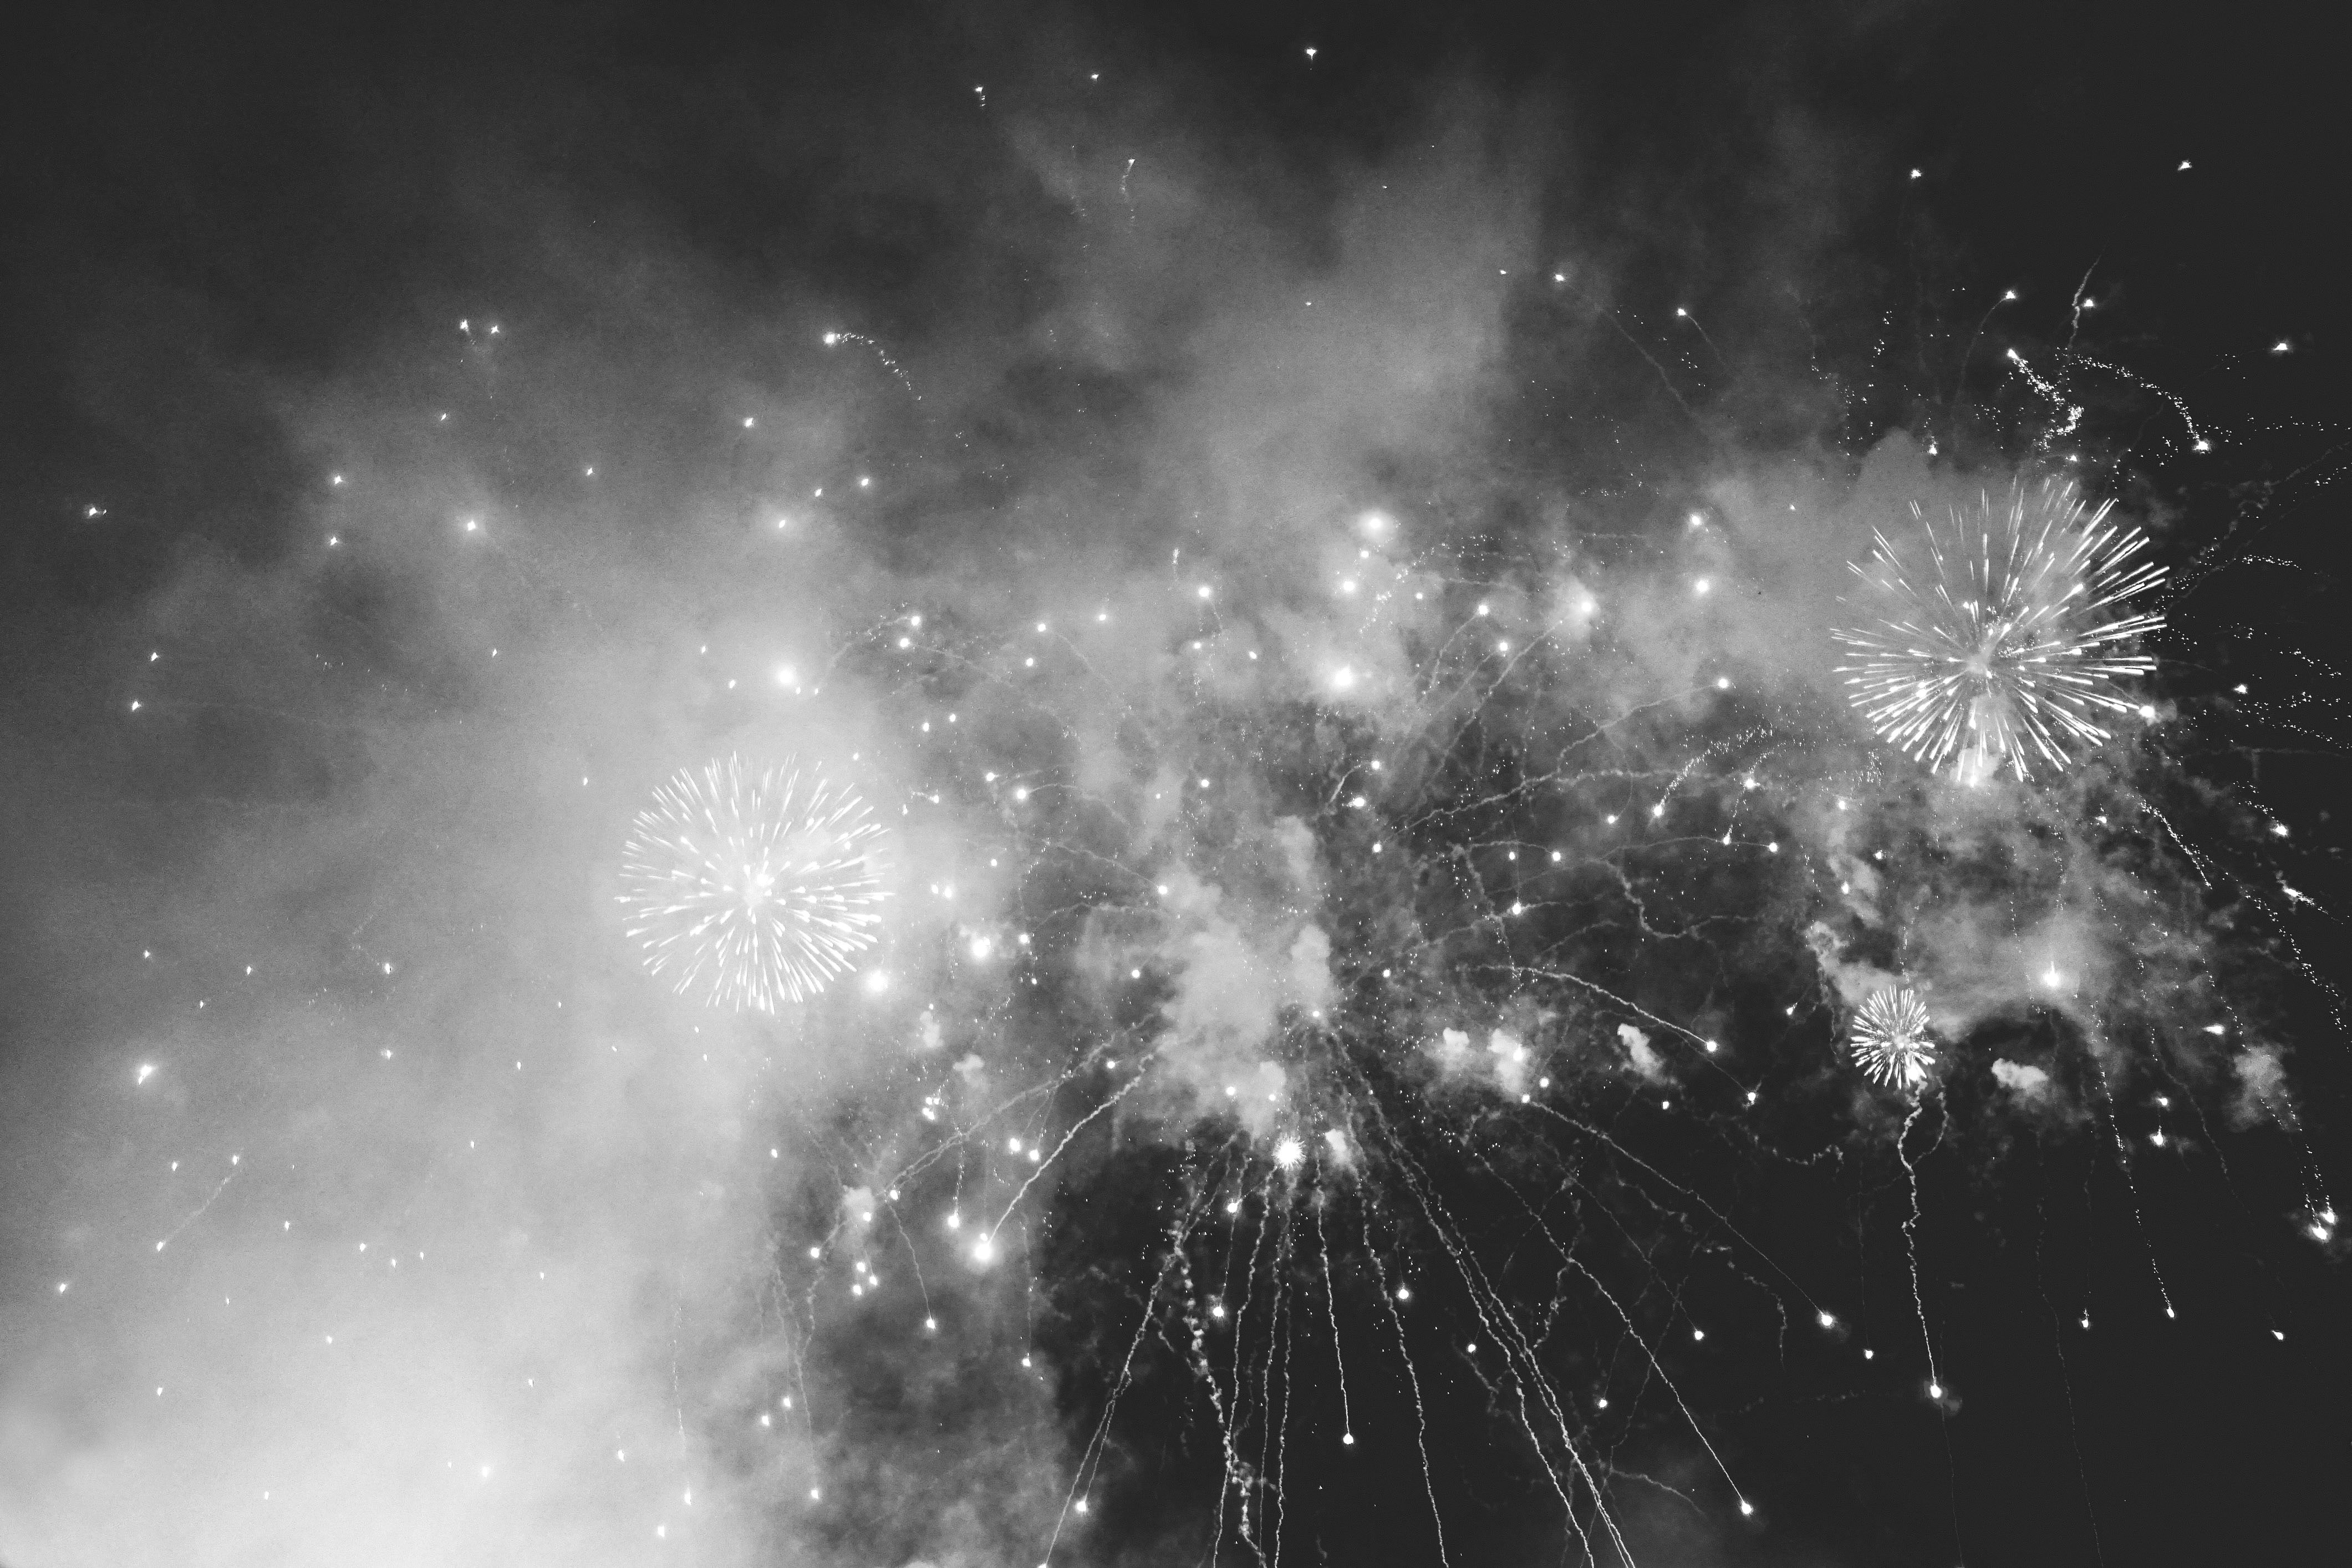 No bang for Phantom Fireworks in recent UDRP Decision